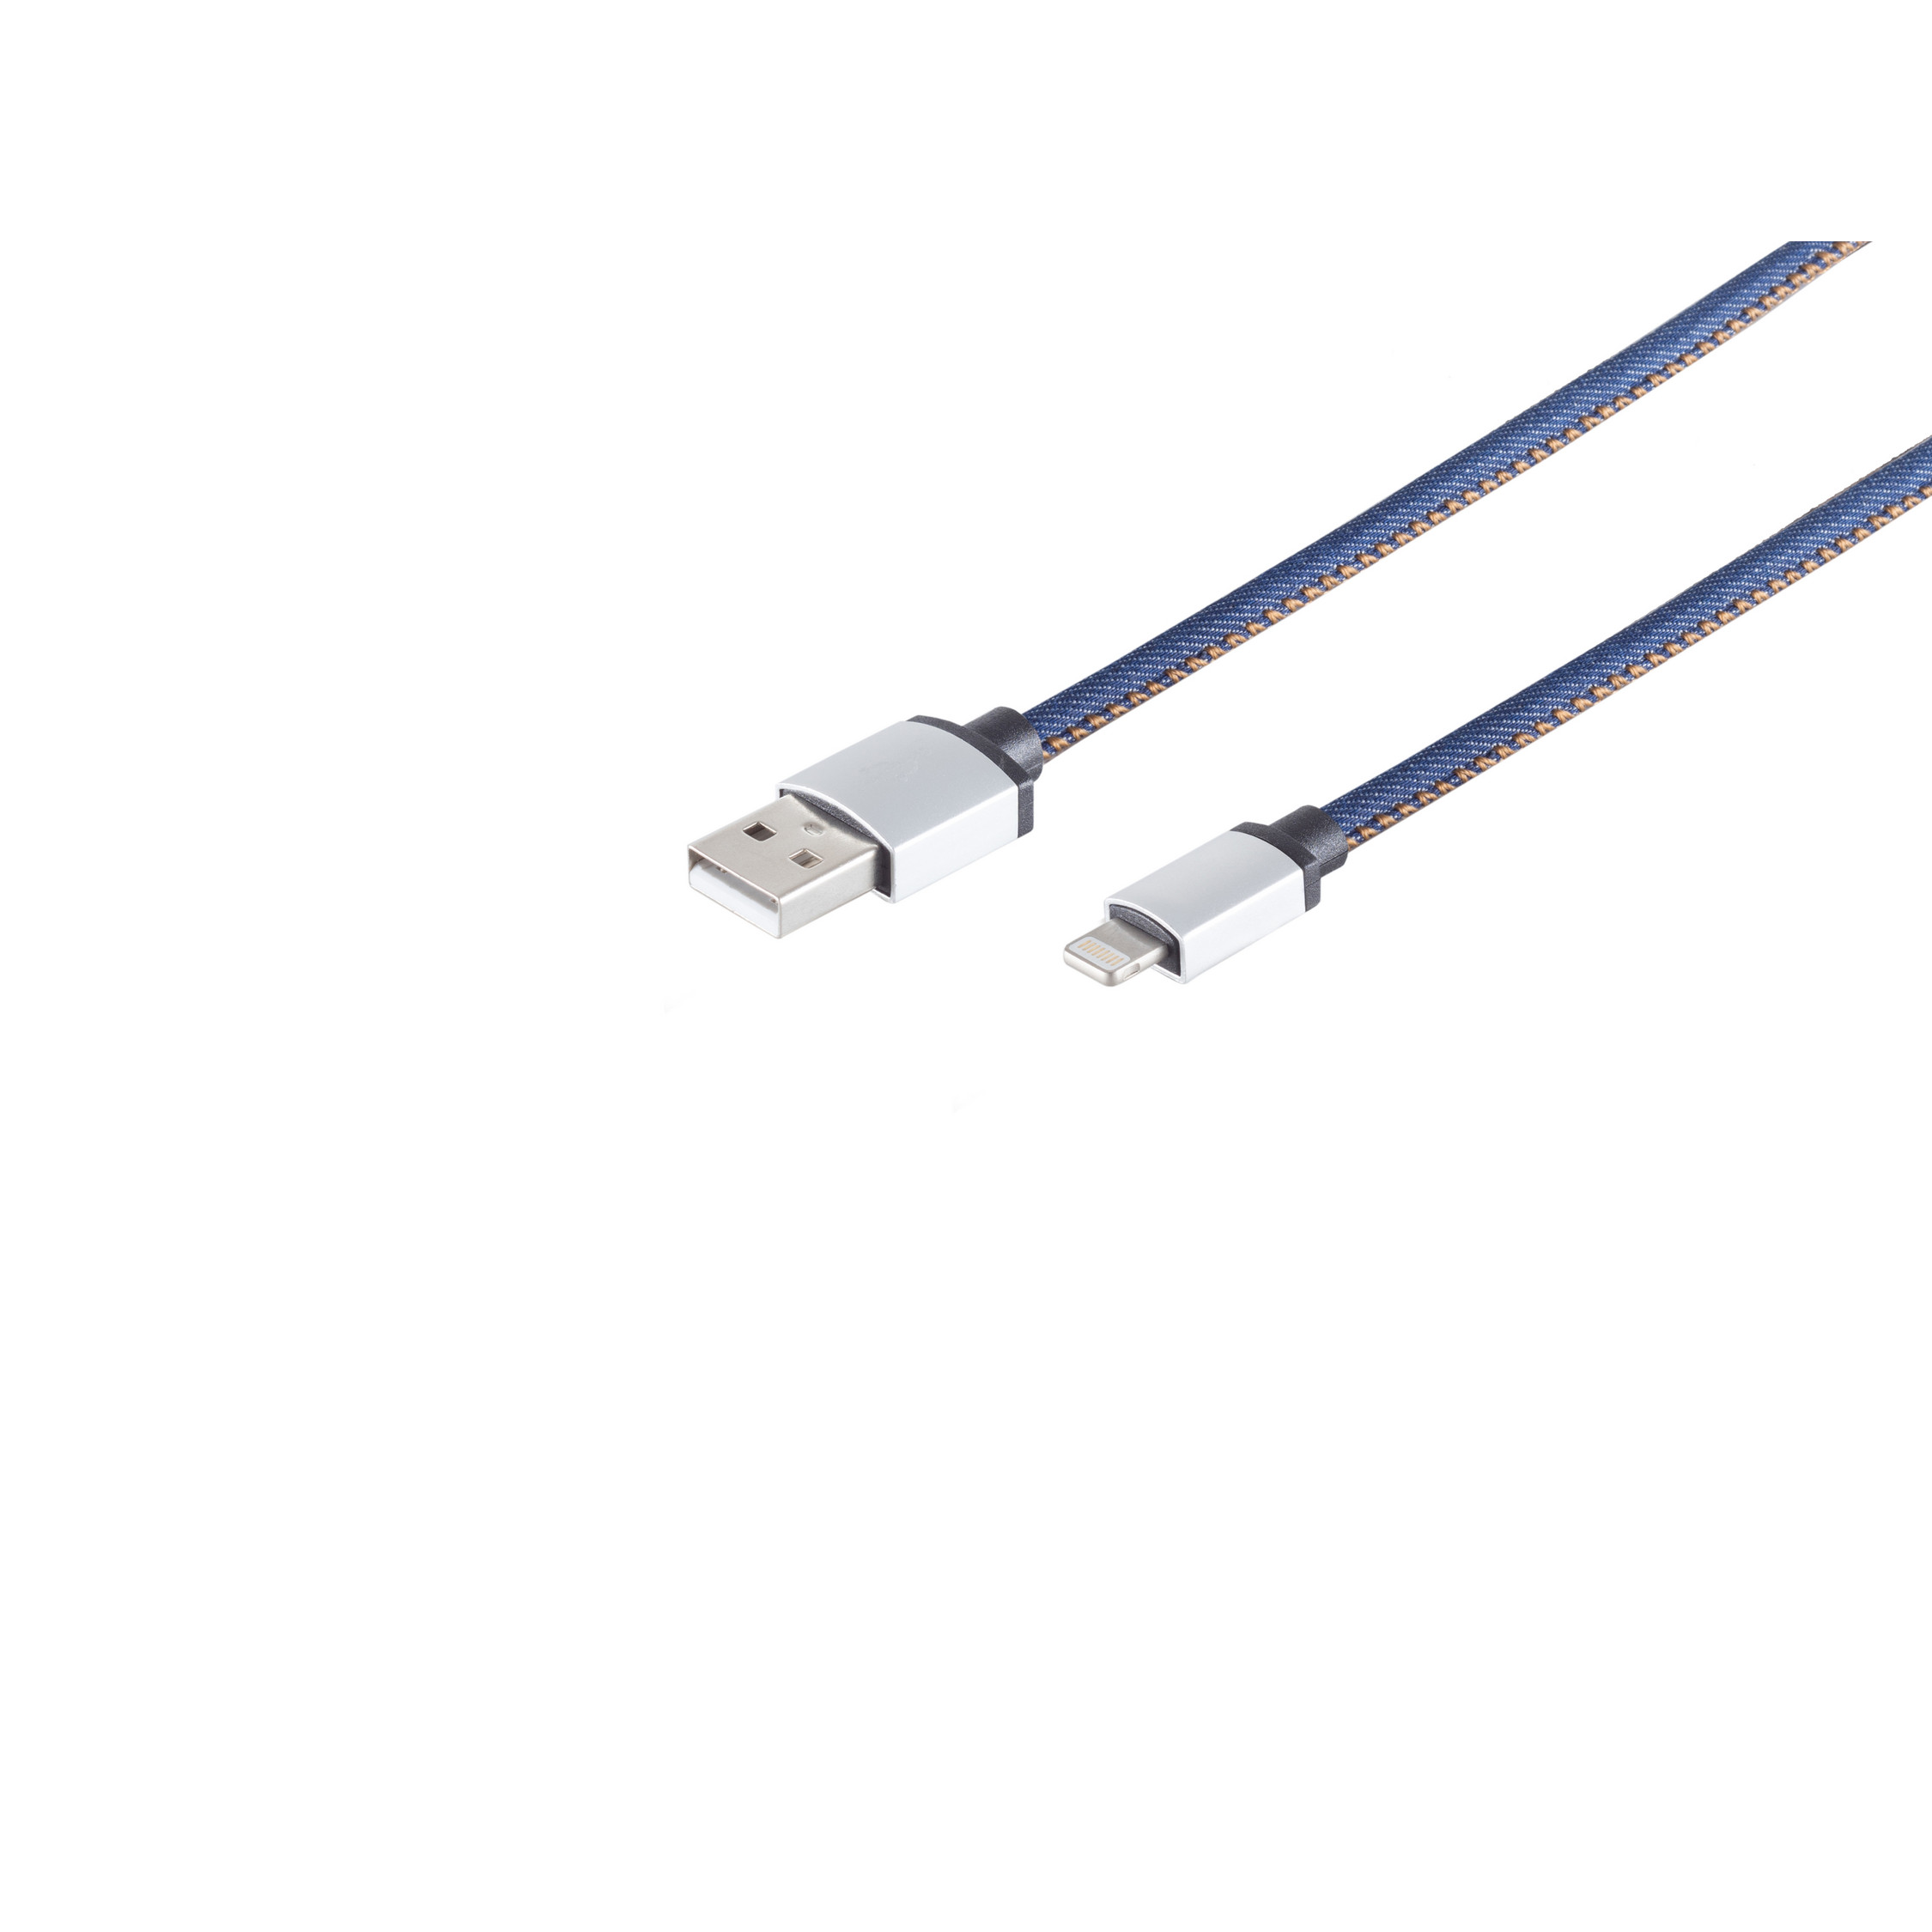 USB CONNECTIVITY MAXIMUM 1m 8-pin S/CONN USB-Ladekabel Stecker, Stecker auf A Kabel blau